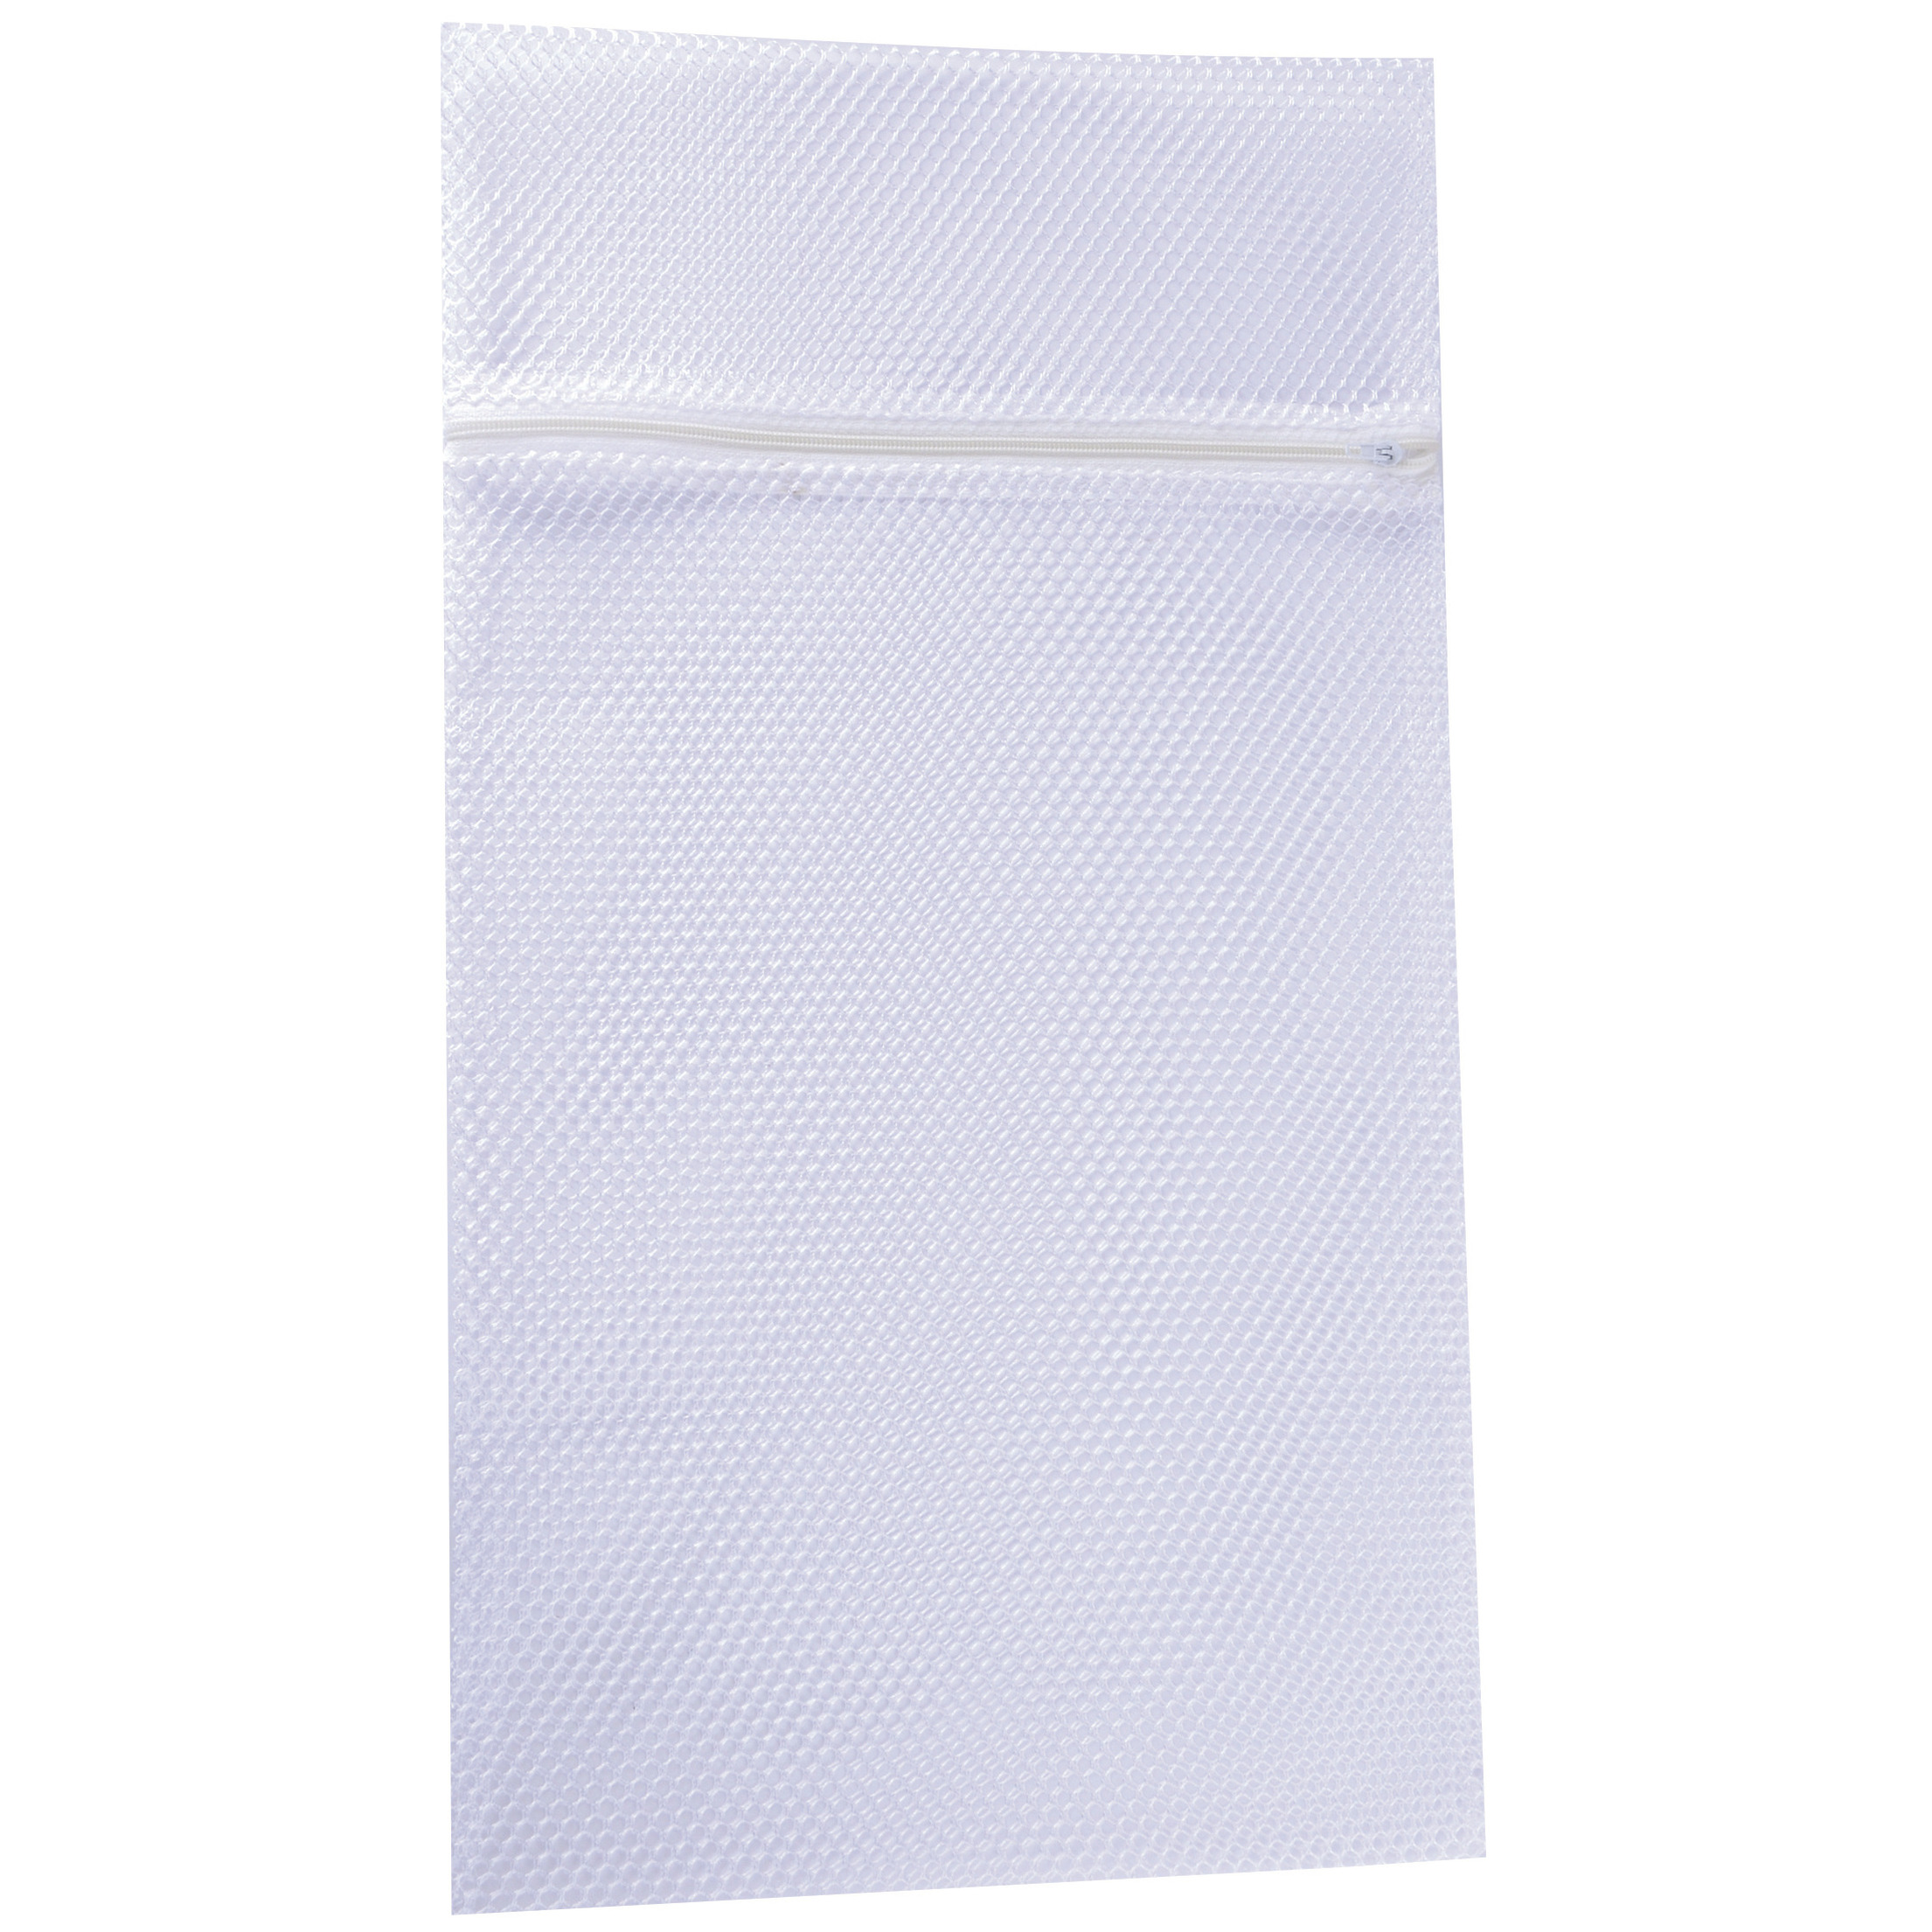 MSV Waszak voor kwetsbare kleding wasgoed-waszak wit Medium size 45 x 25 cm